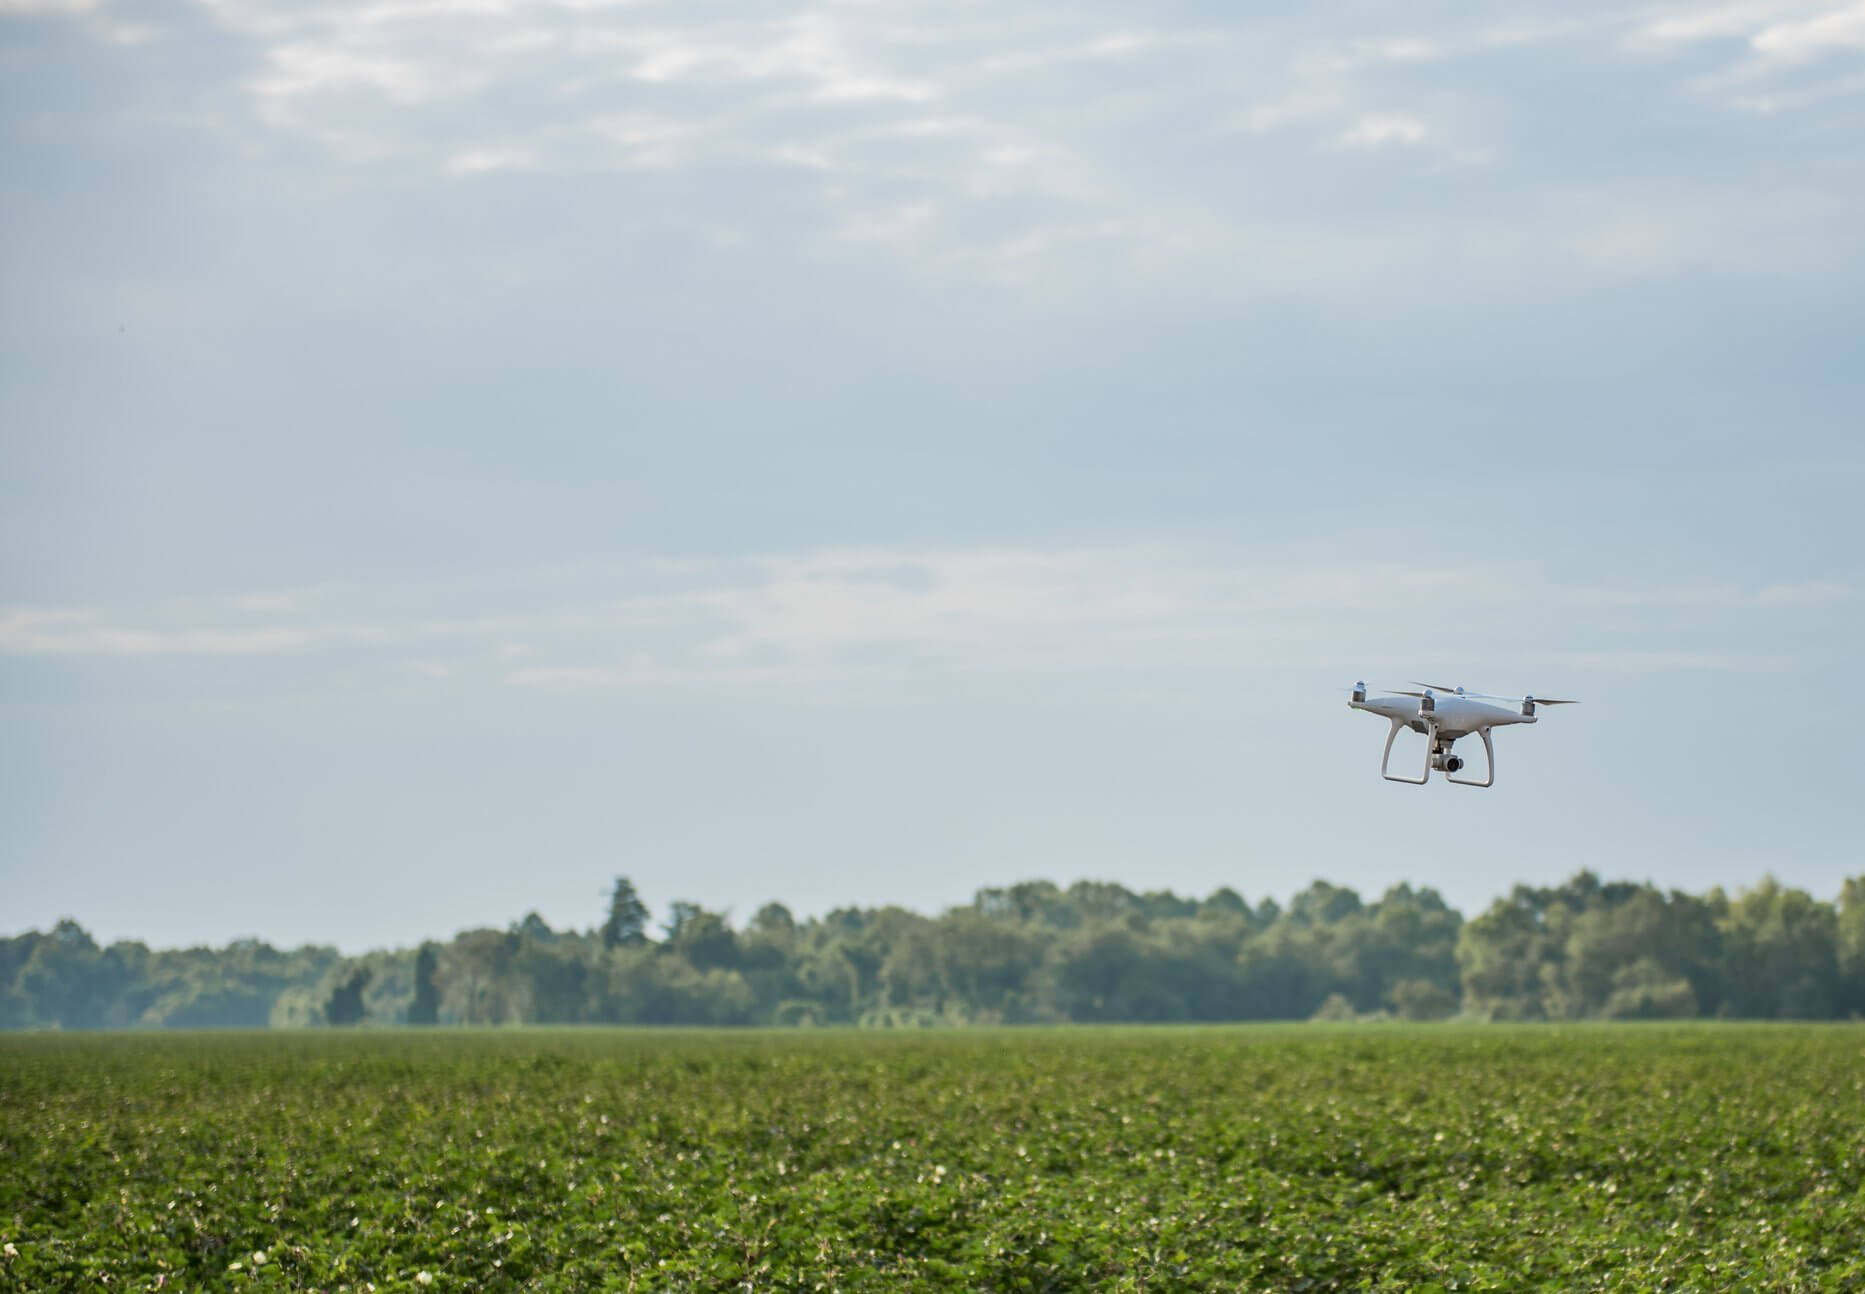 Drone flies over crops in a field